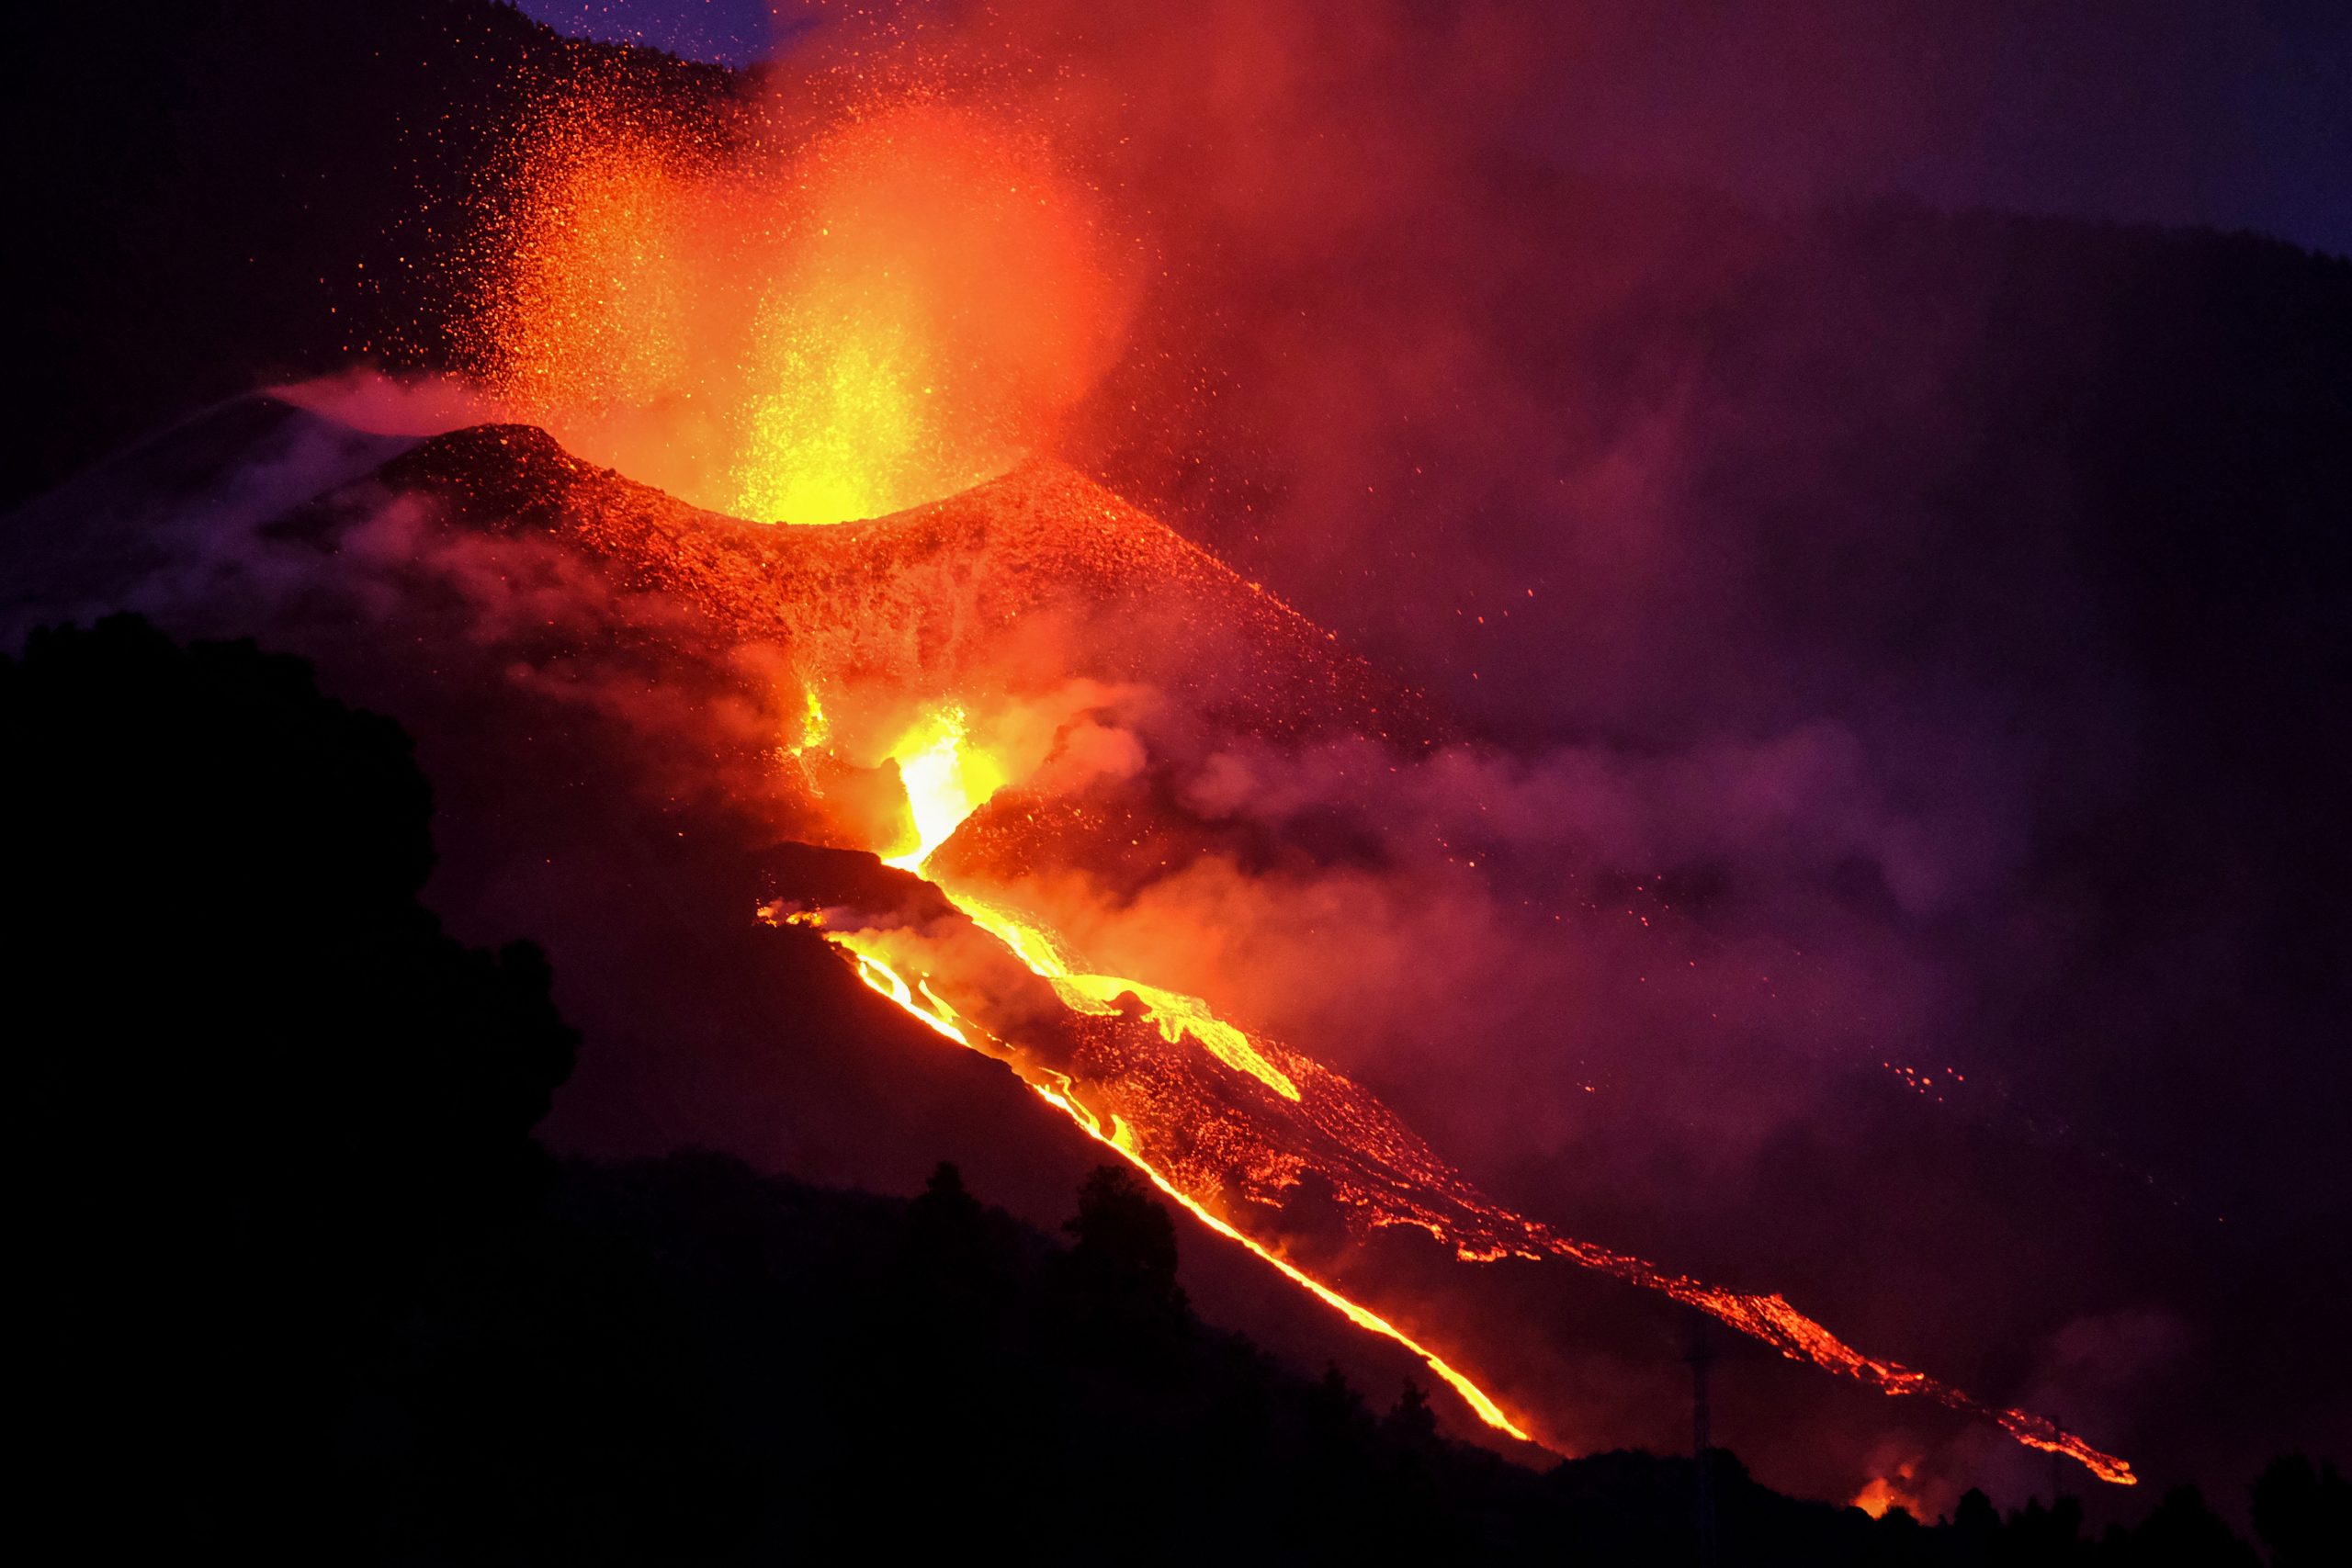 Video: Ground splits open and lava-like rock burns underneath |Watch